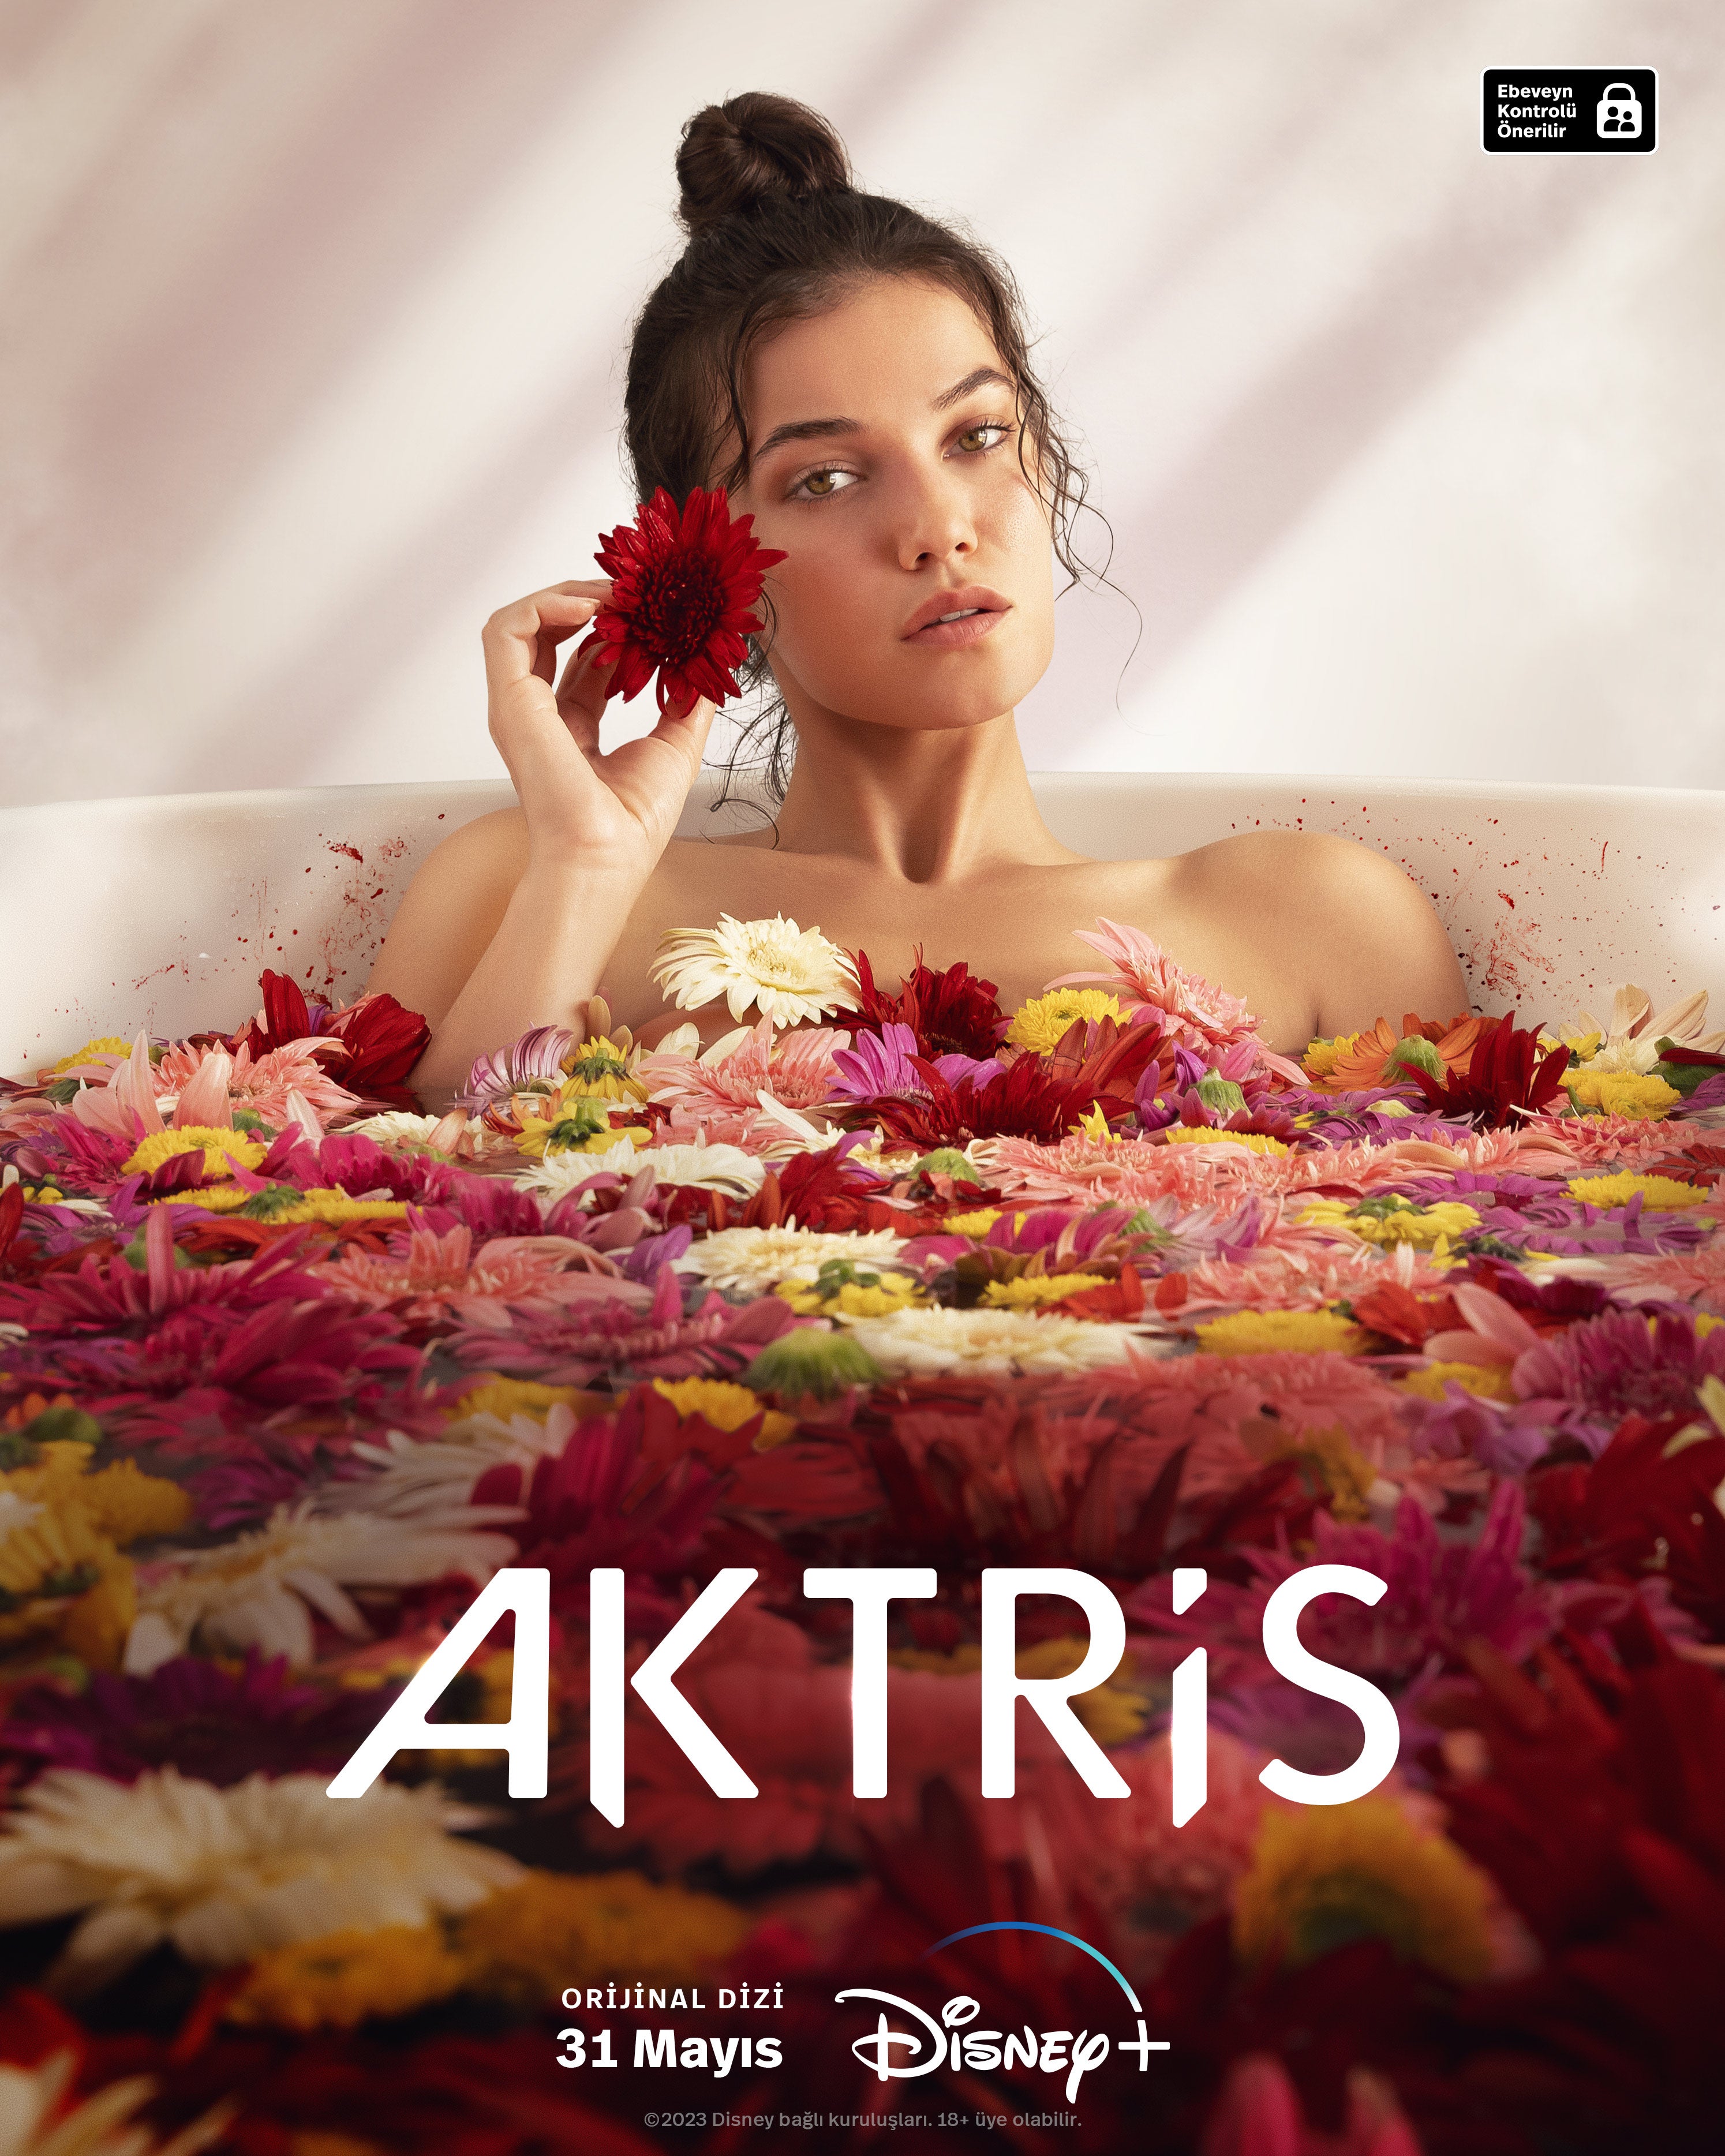 TV ratings for Actress (Aktris) in Brazil. Disney+ TV series